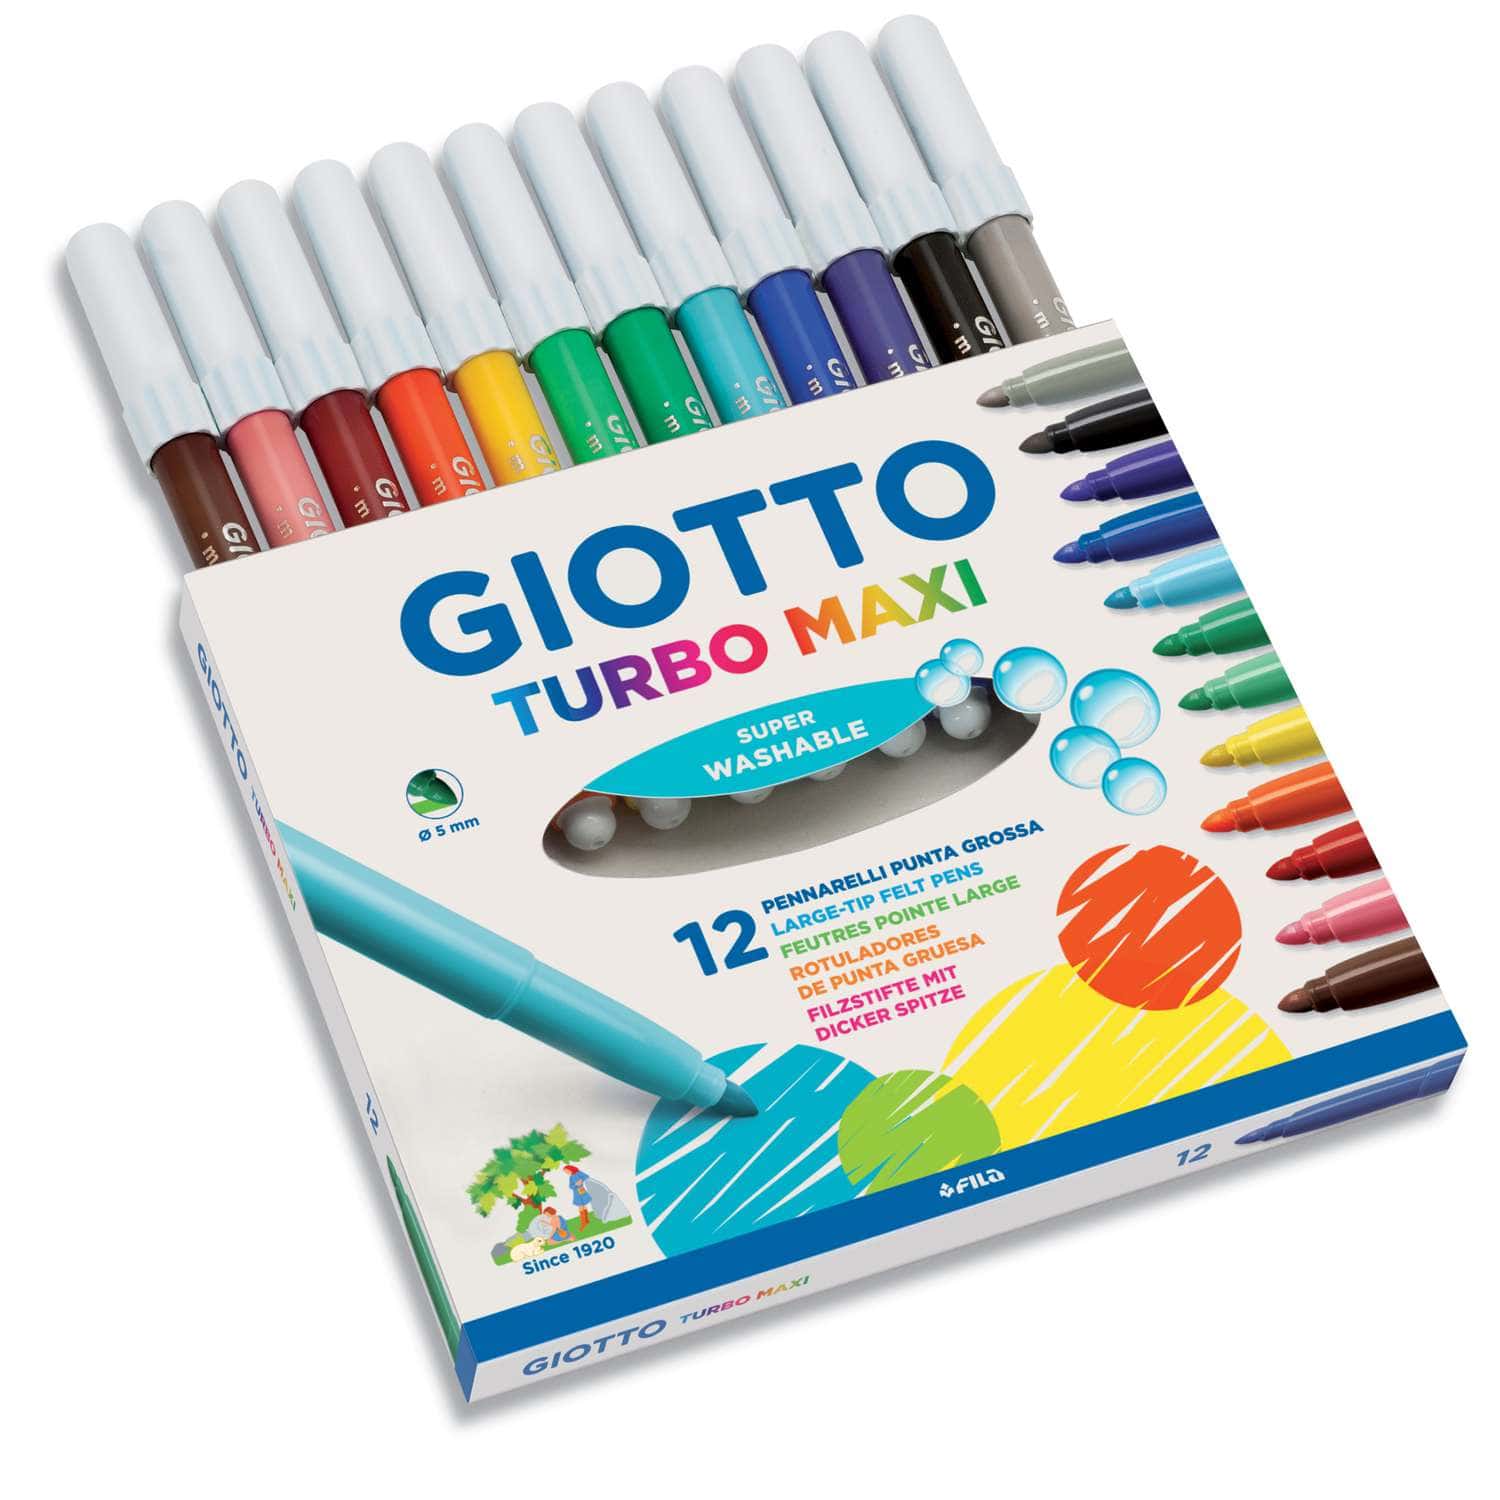 GIOTTO turbo maxi 12 pennarelli – Shopping Store